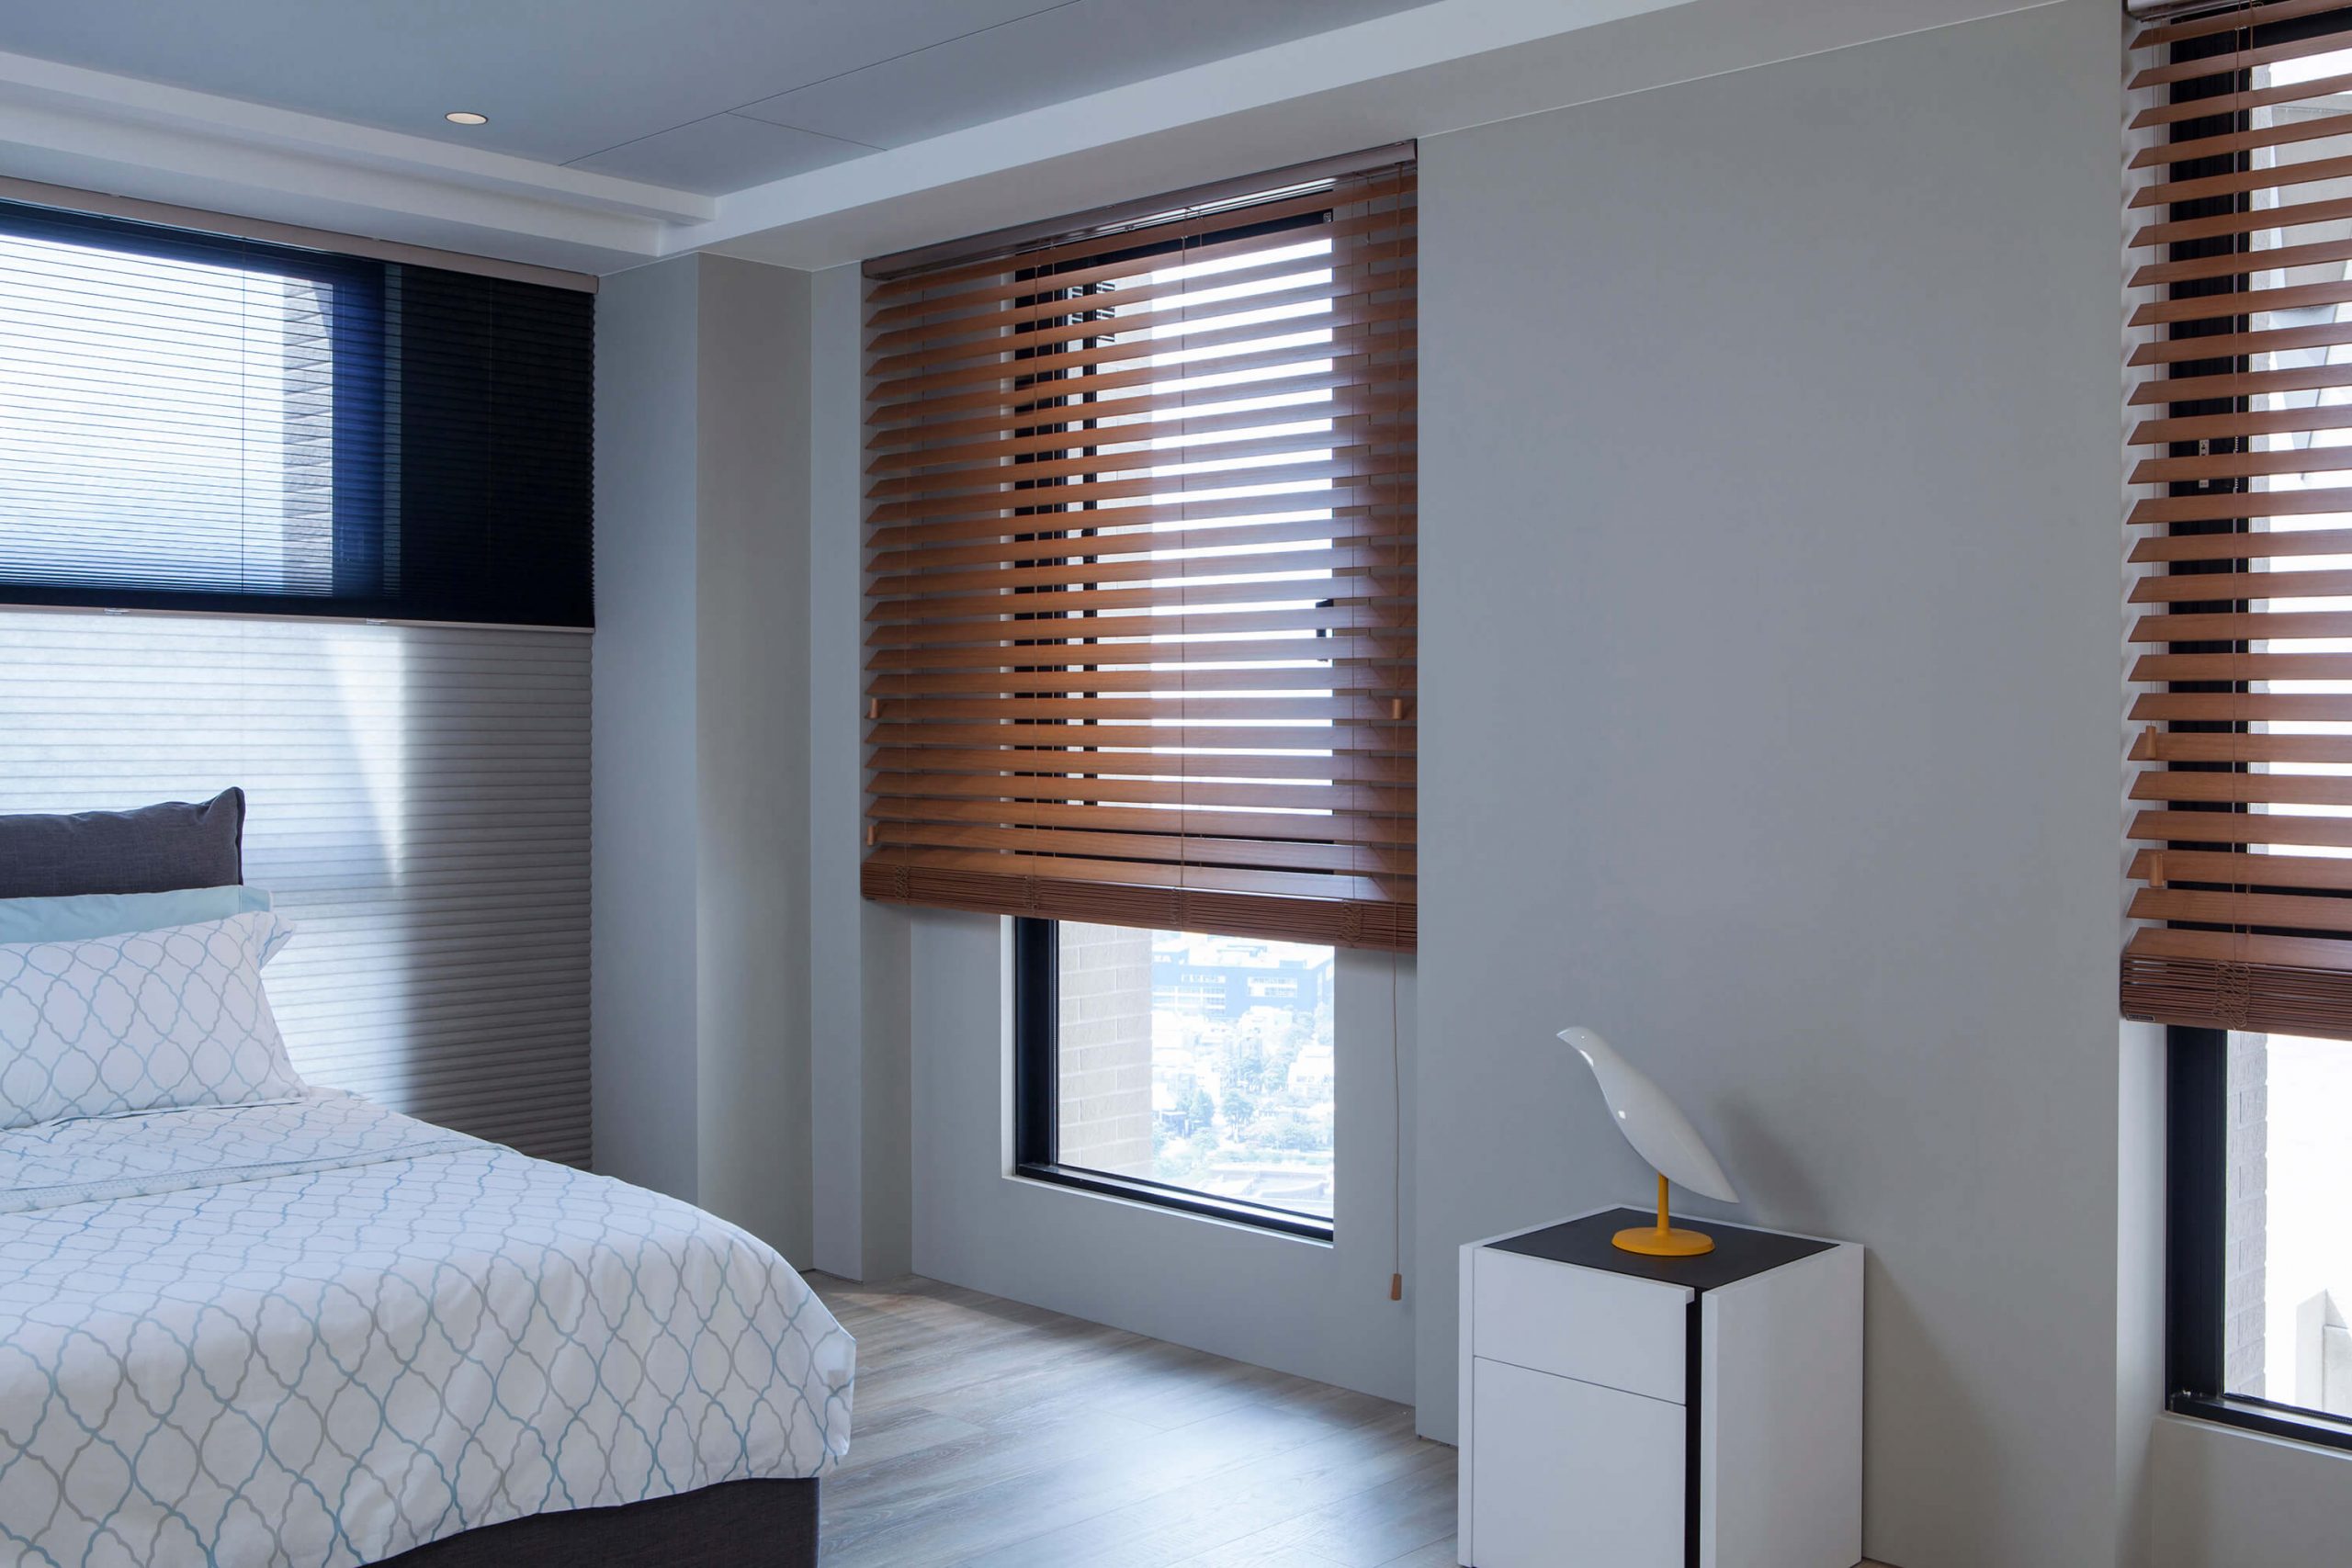 Wooden blinds on bedroom windows